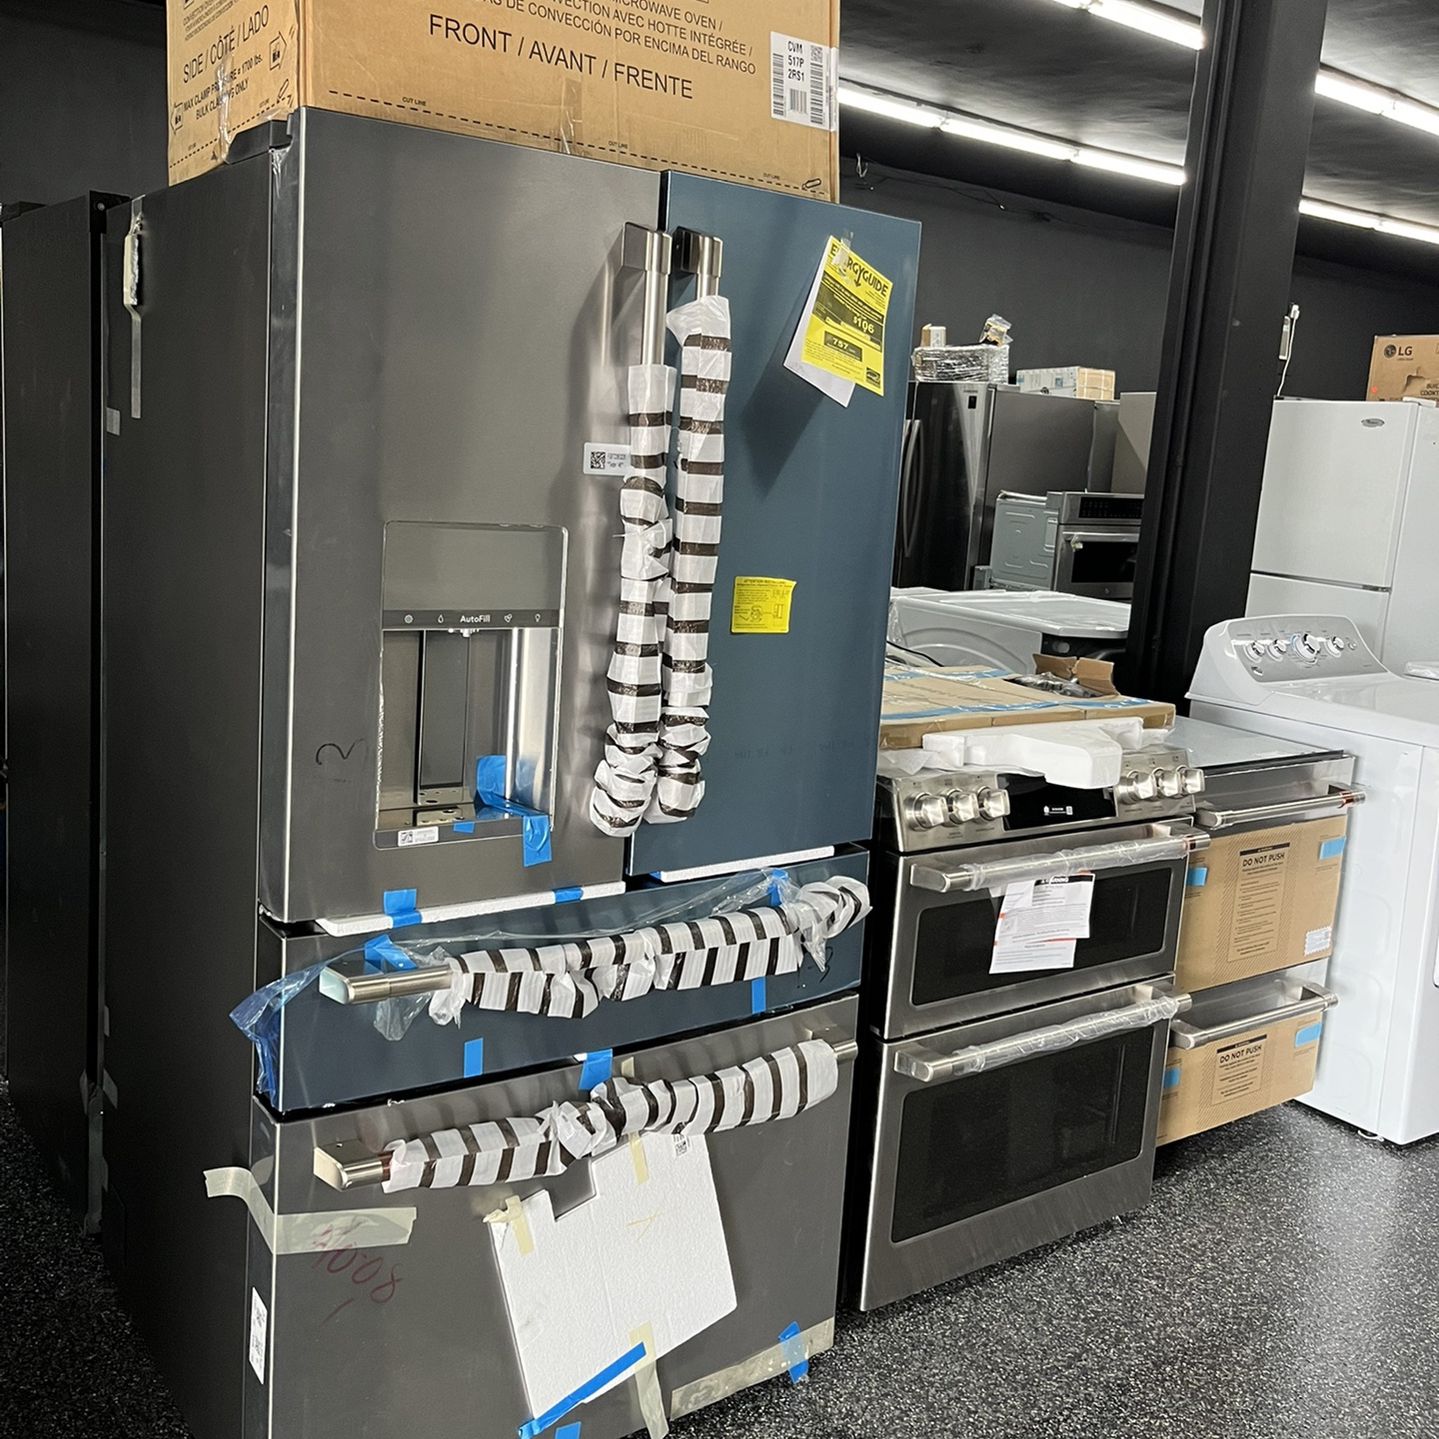 New Cafe Stainless Steel Bundle Refrigerator Range Dishwasher Microwave 